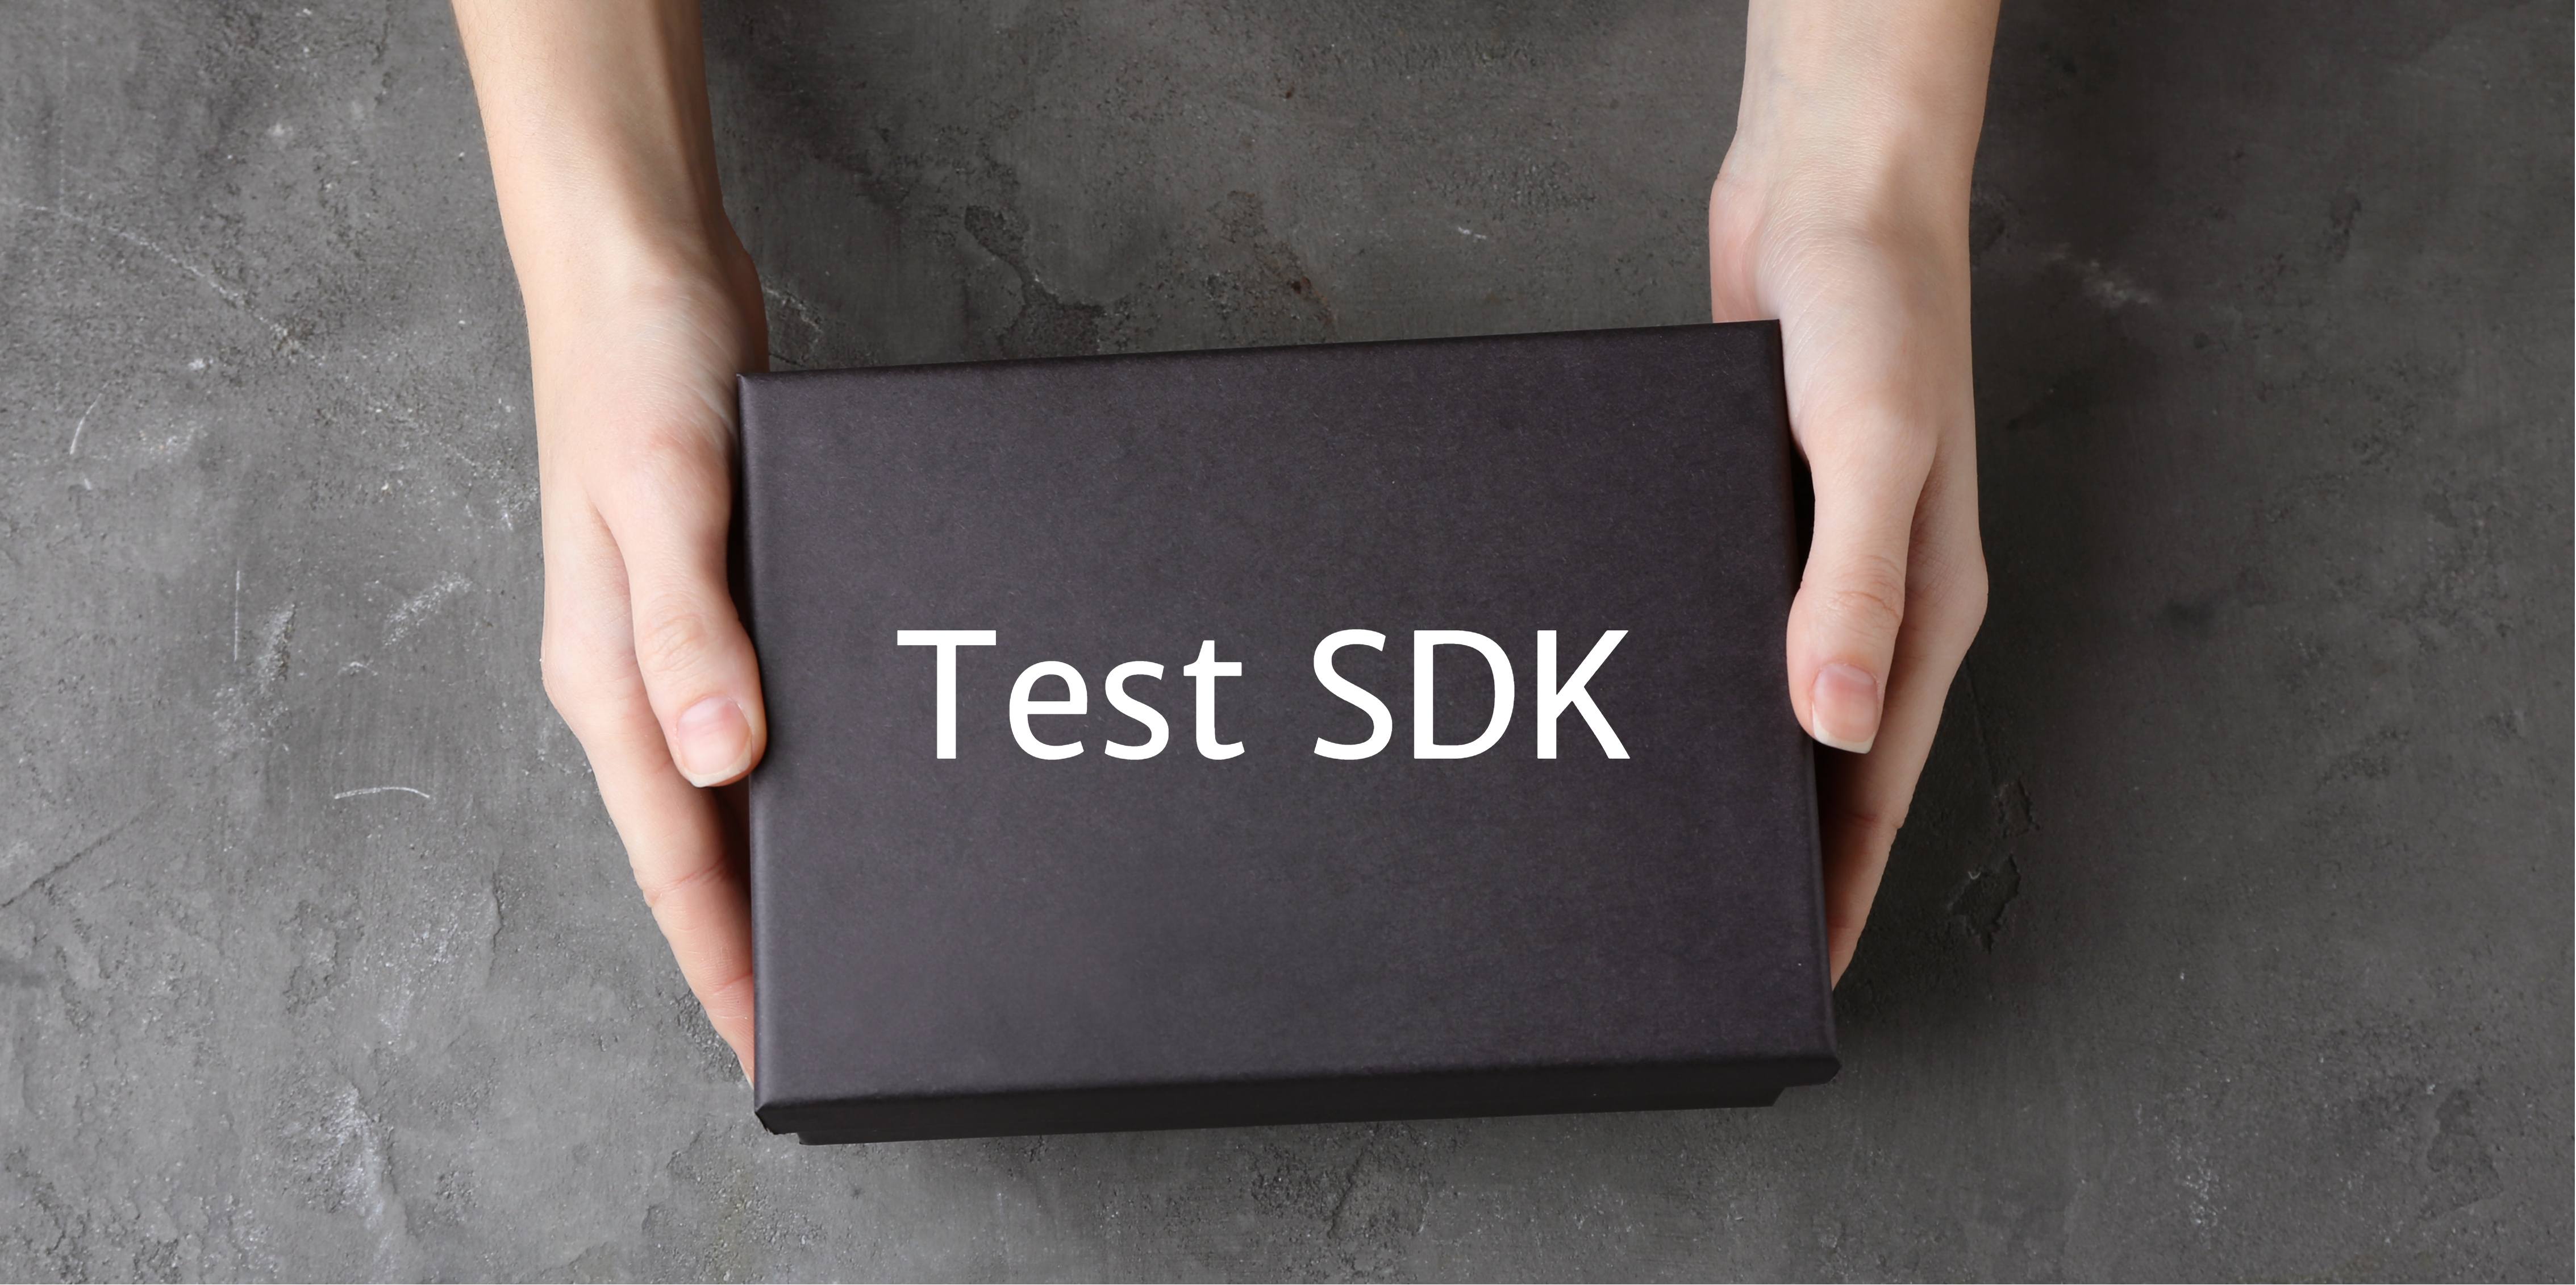 Acumatica Test SDK : Obtenir plus de données